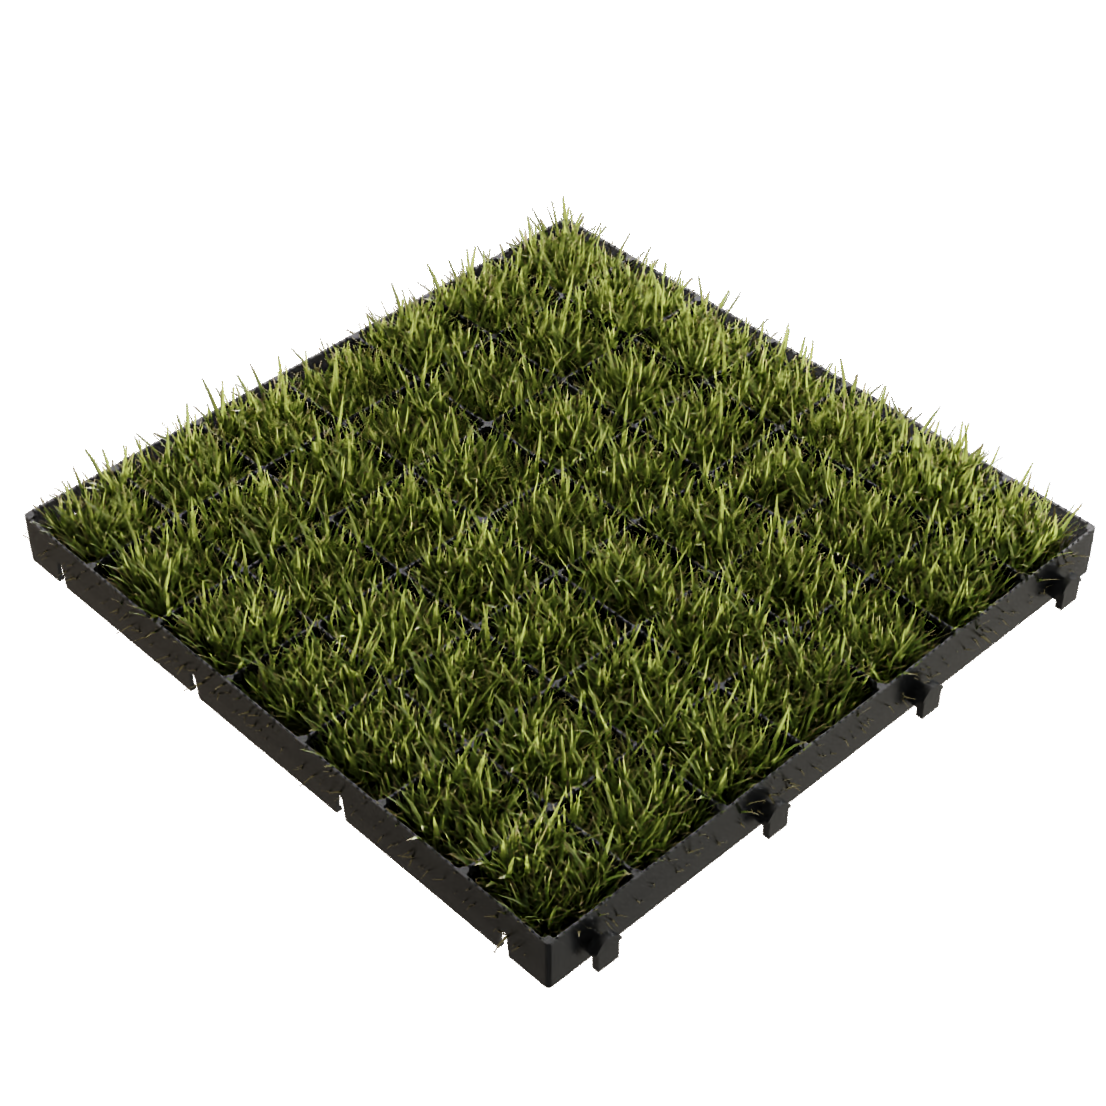 Grass pavers by IBRAN